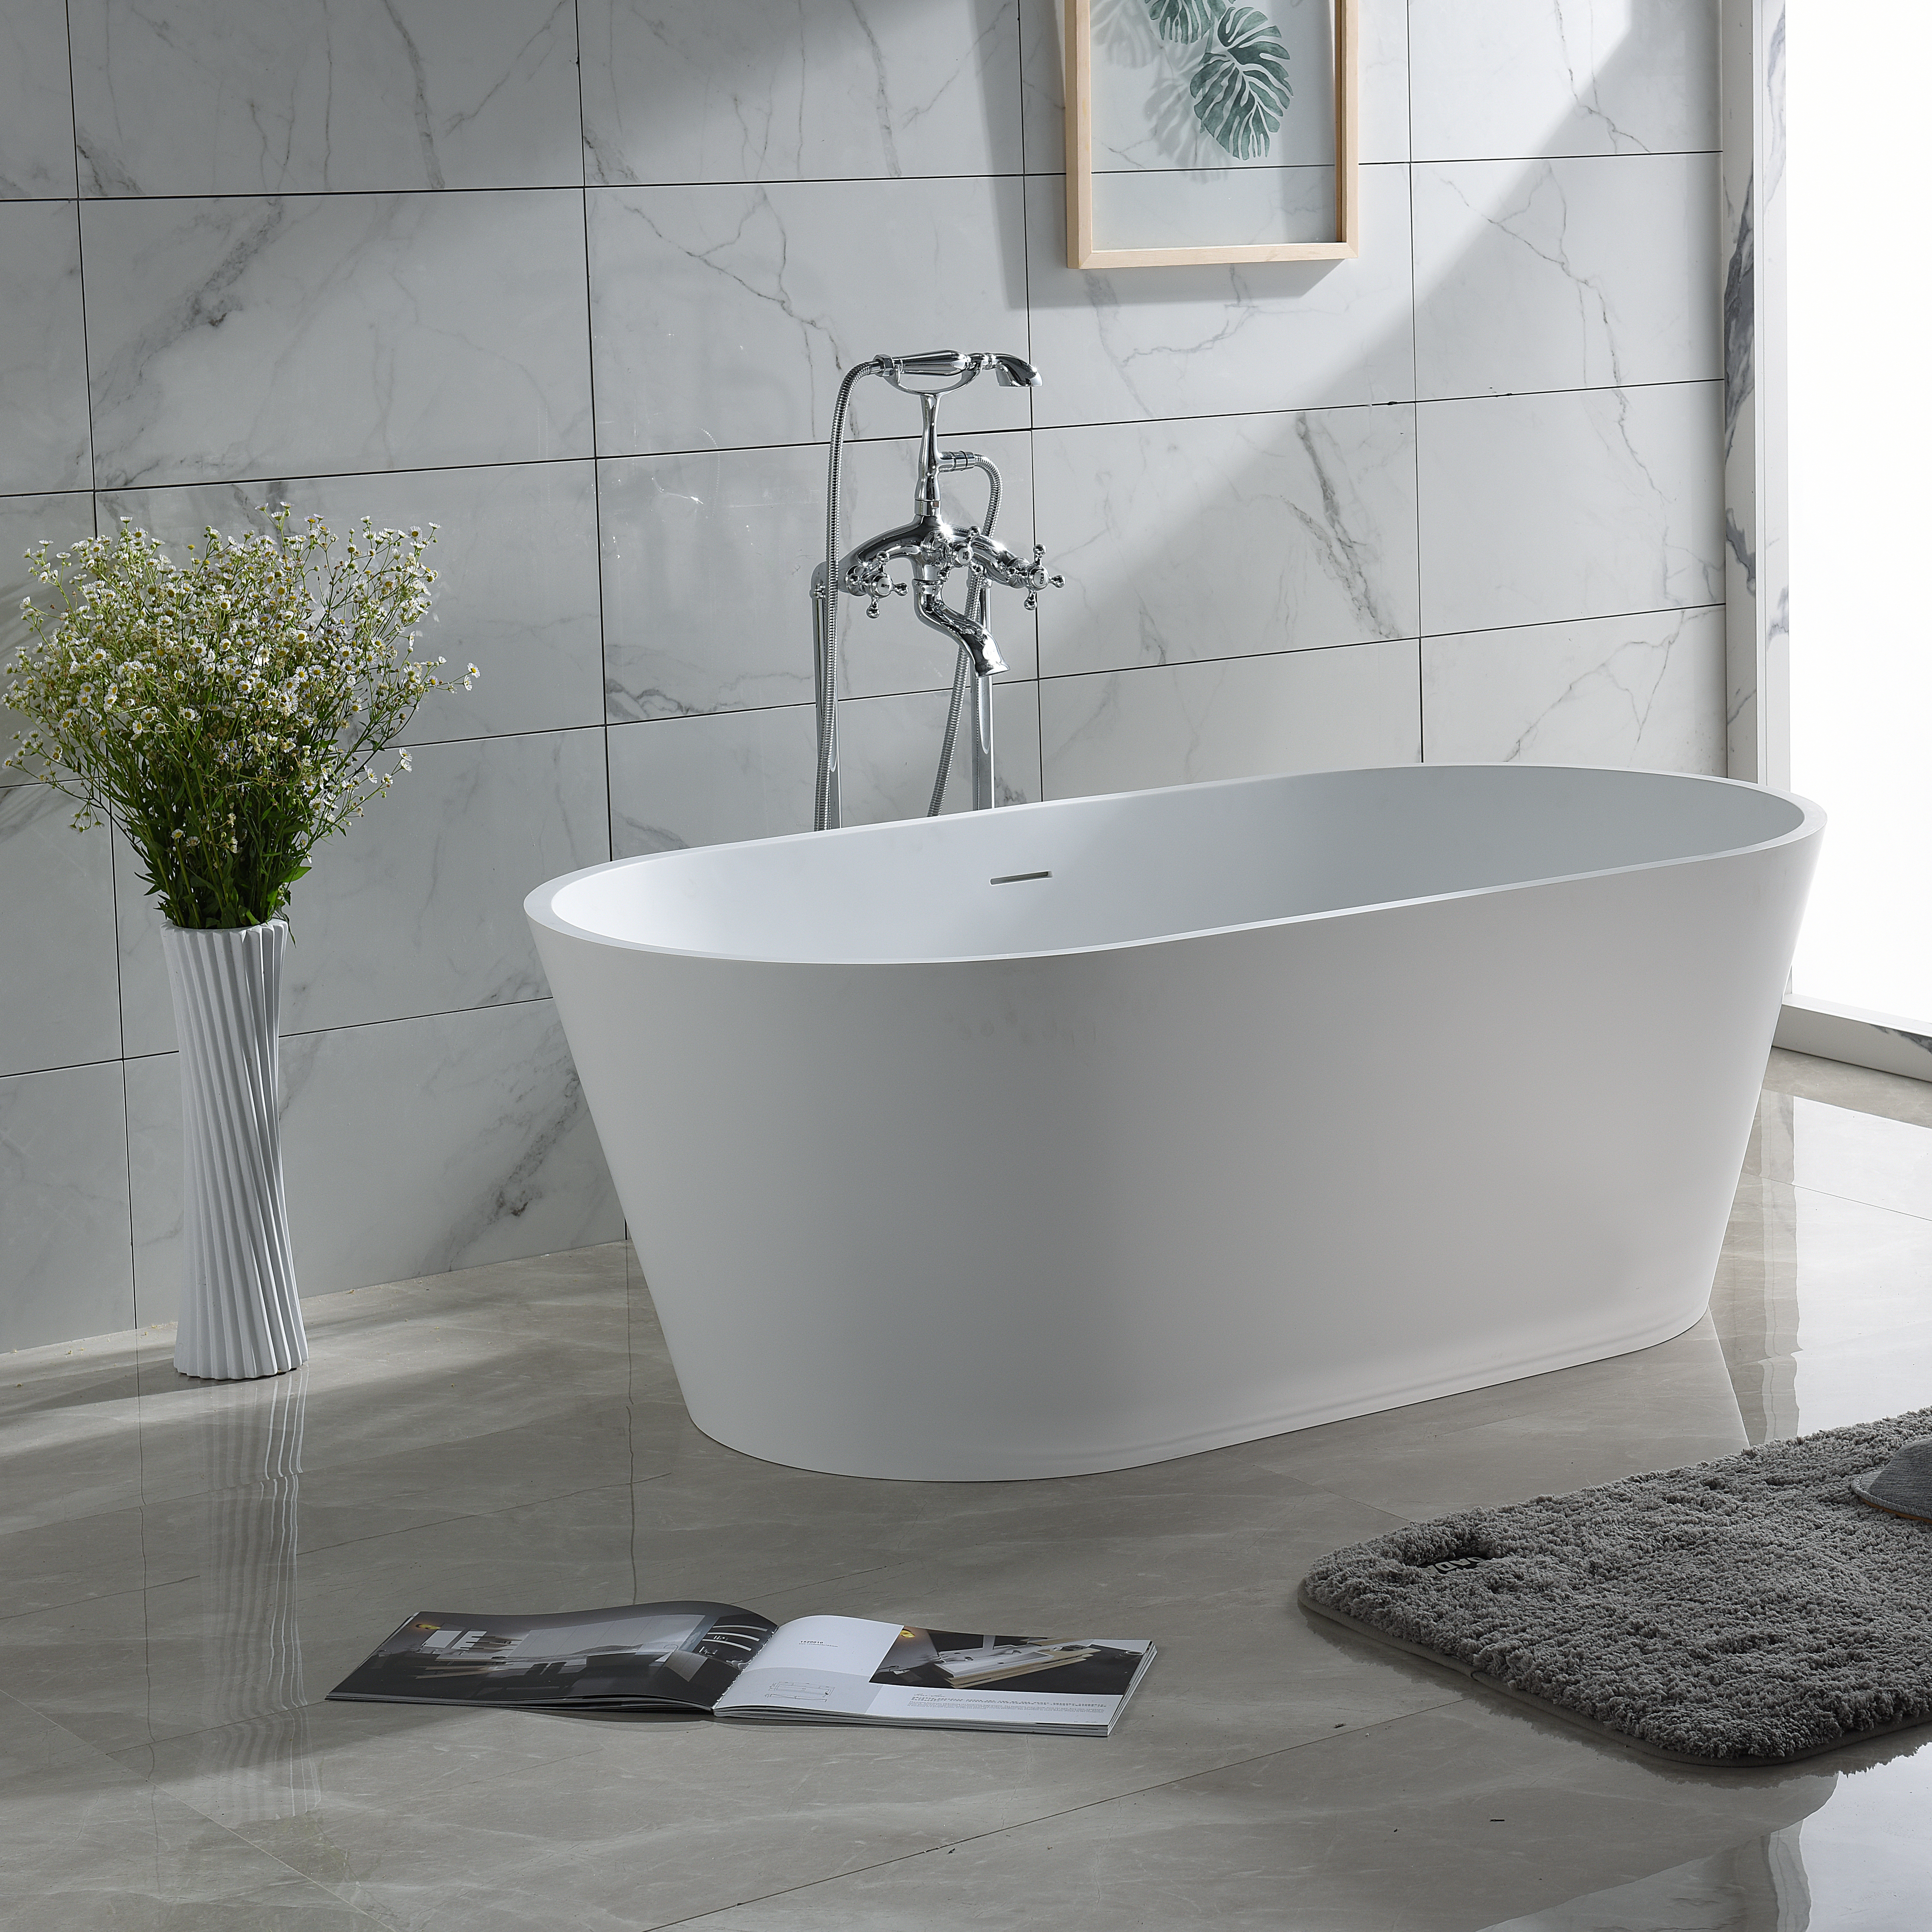 Oval shape free standing solid surface matt white bathtub